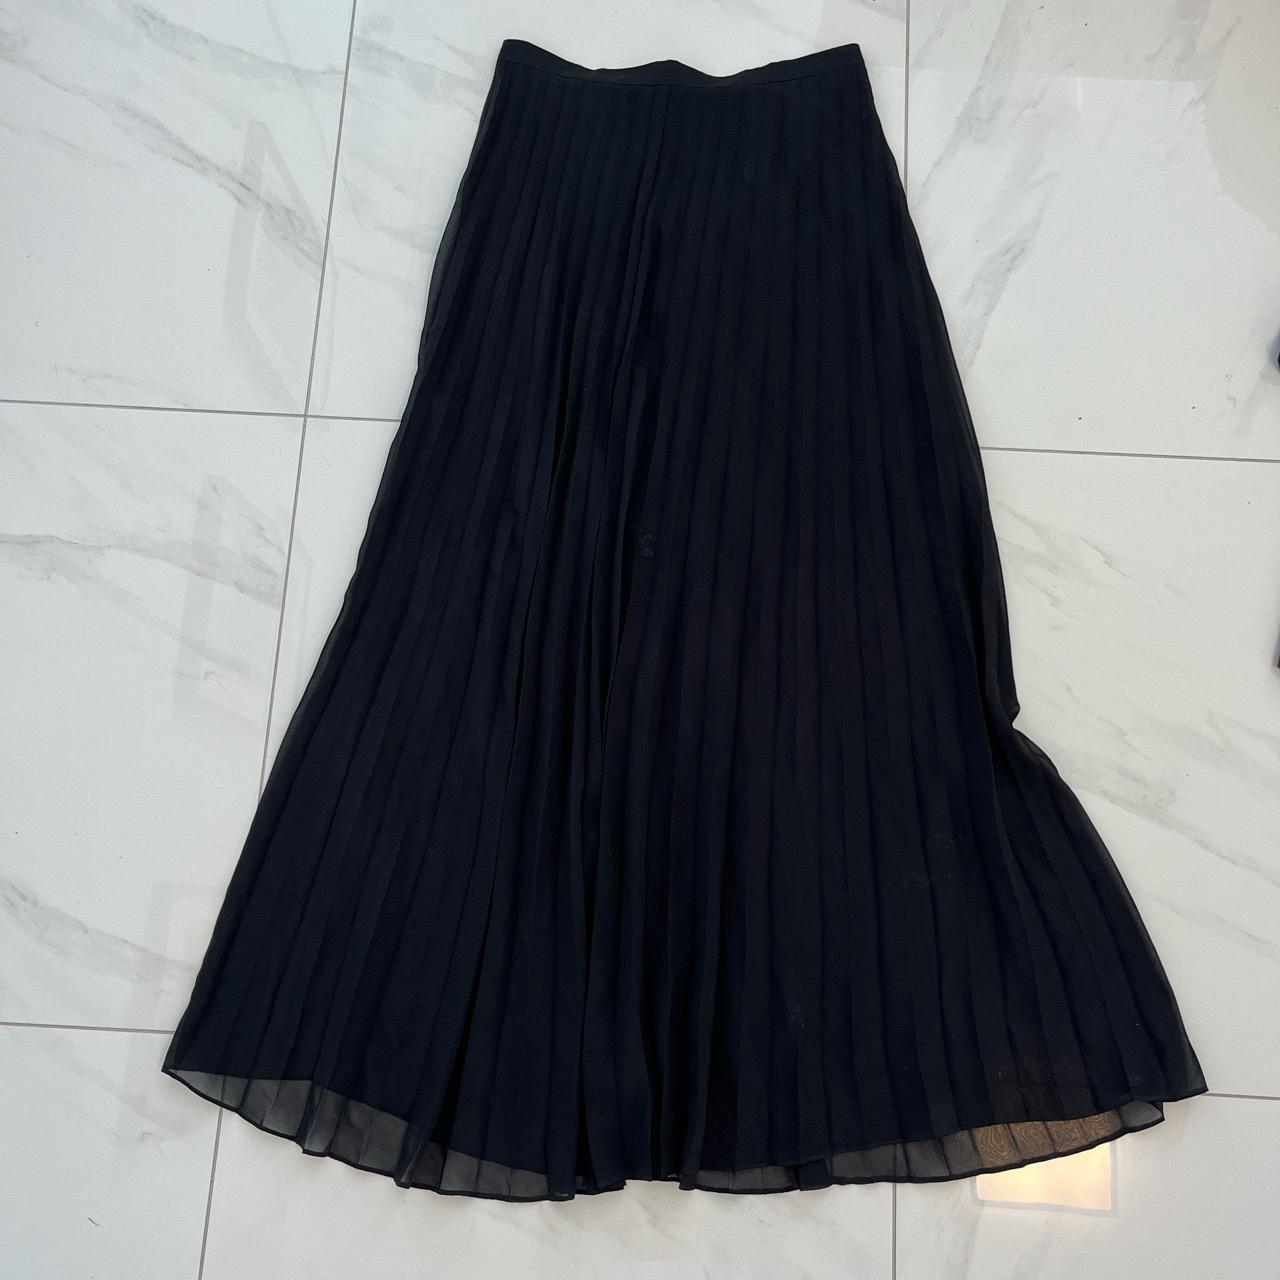 Black maxi skirt - size 40 - Depop